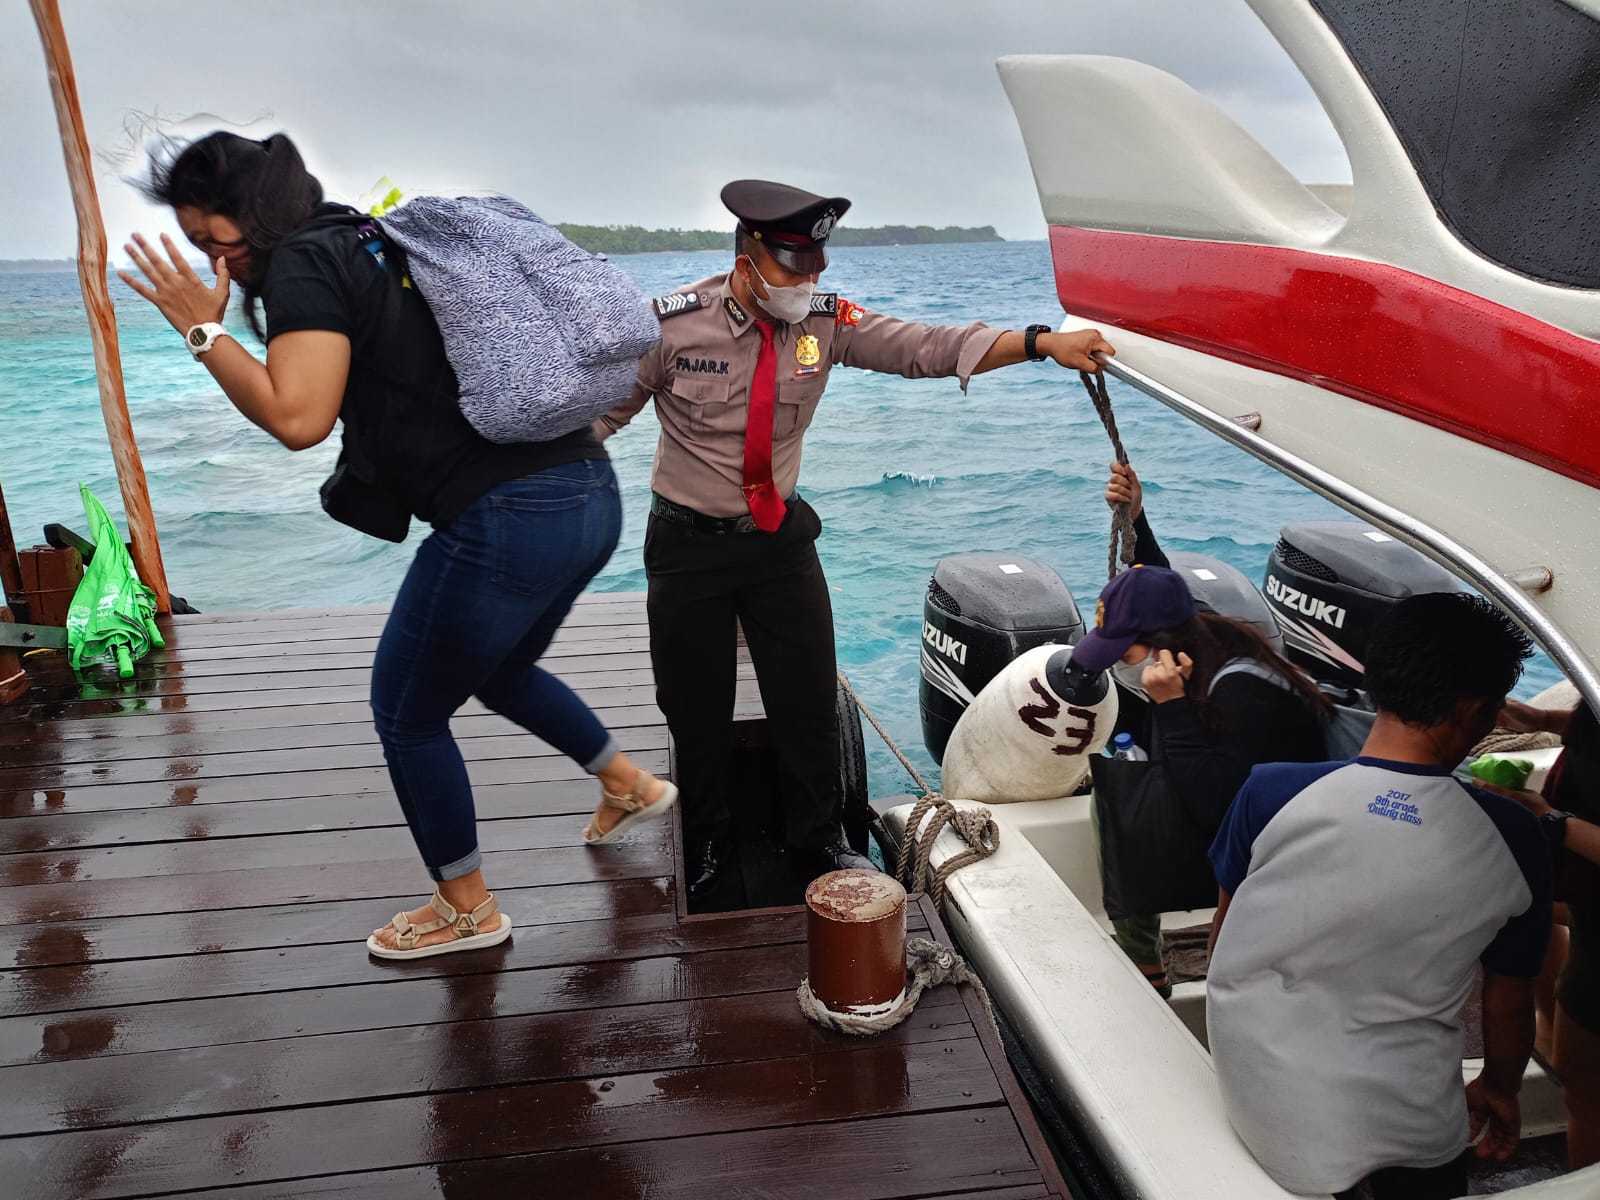 Satuan Pam Obvit Polres Kepulauan Seribu Sajikan Pelayanan Humanis untuk Wisatawan Menuju dan dari Kepulauan Seribu